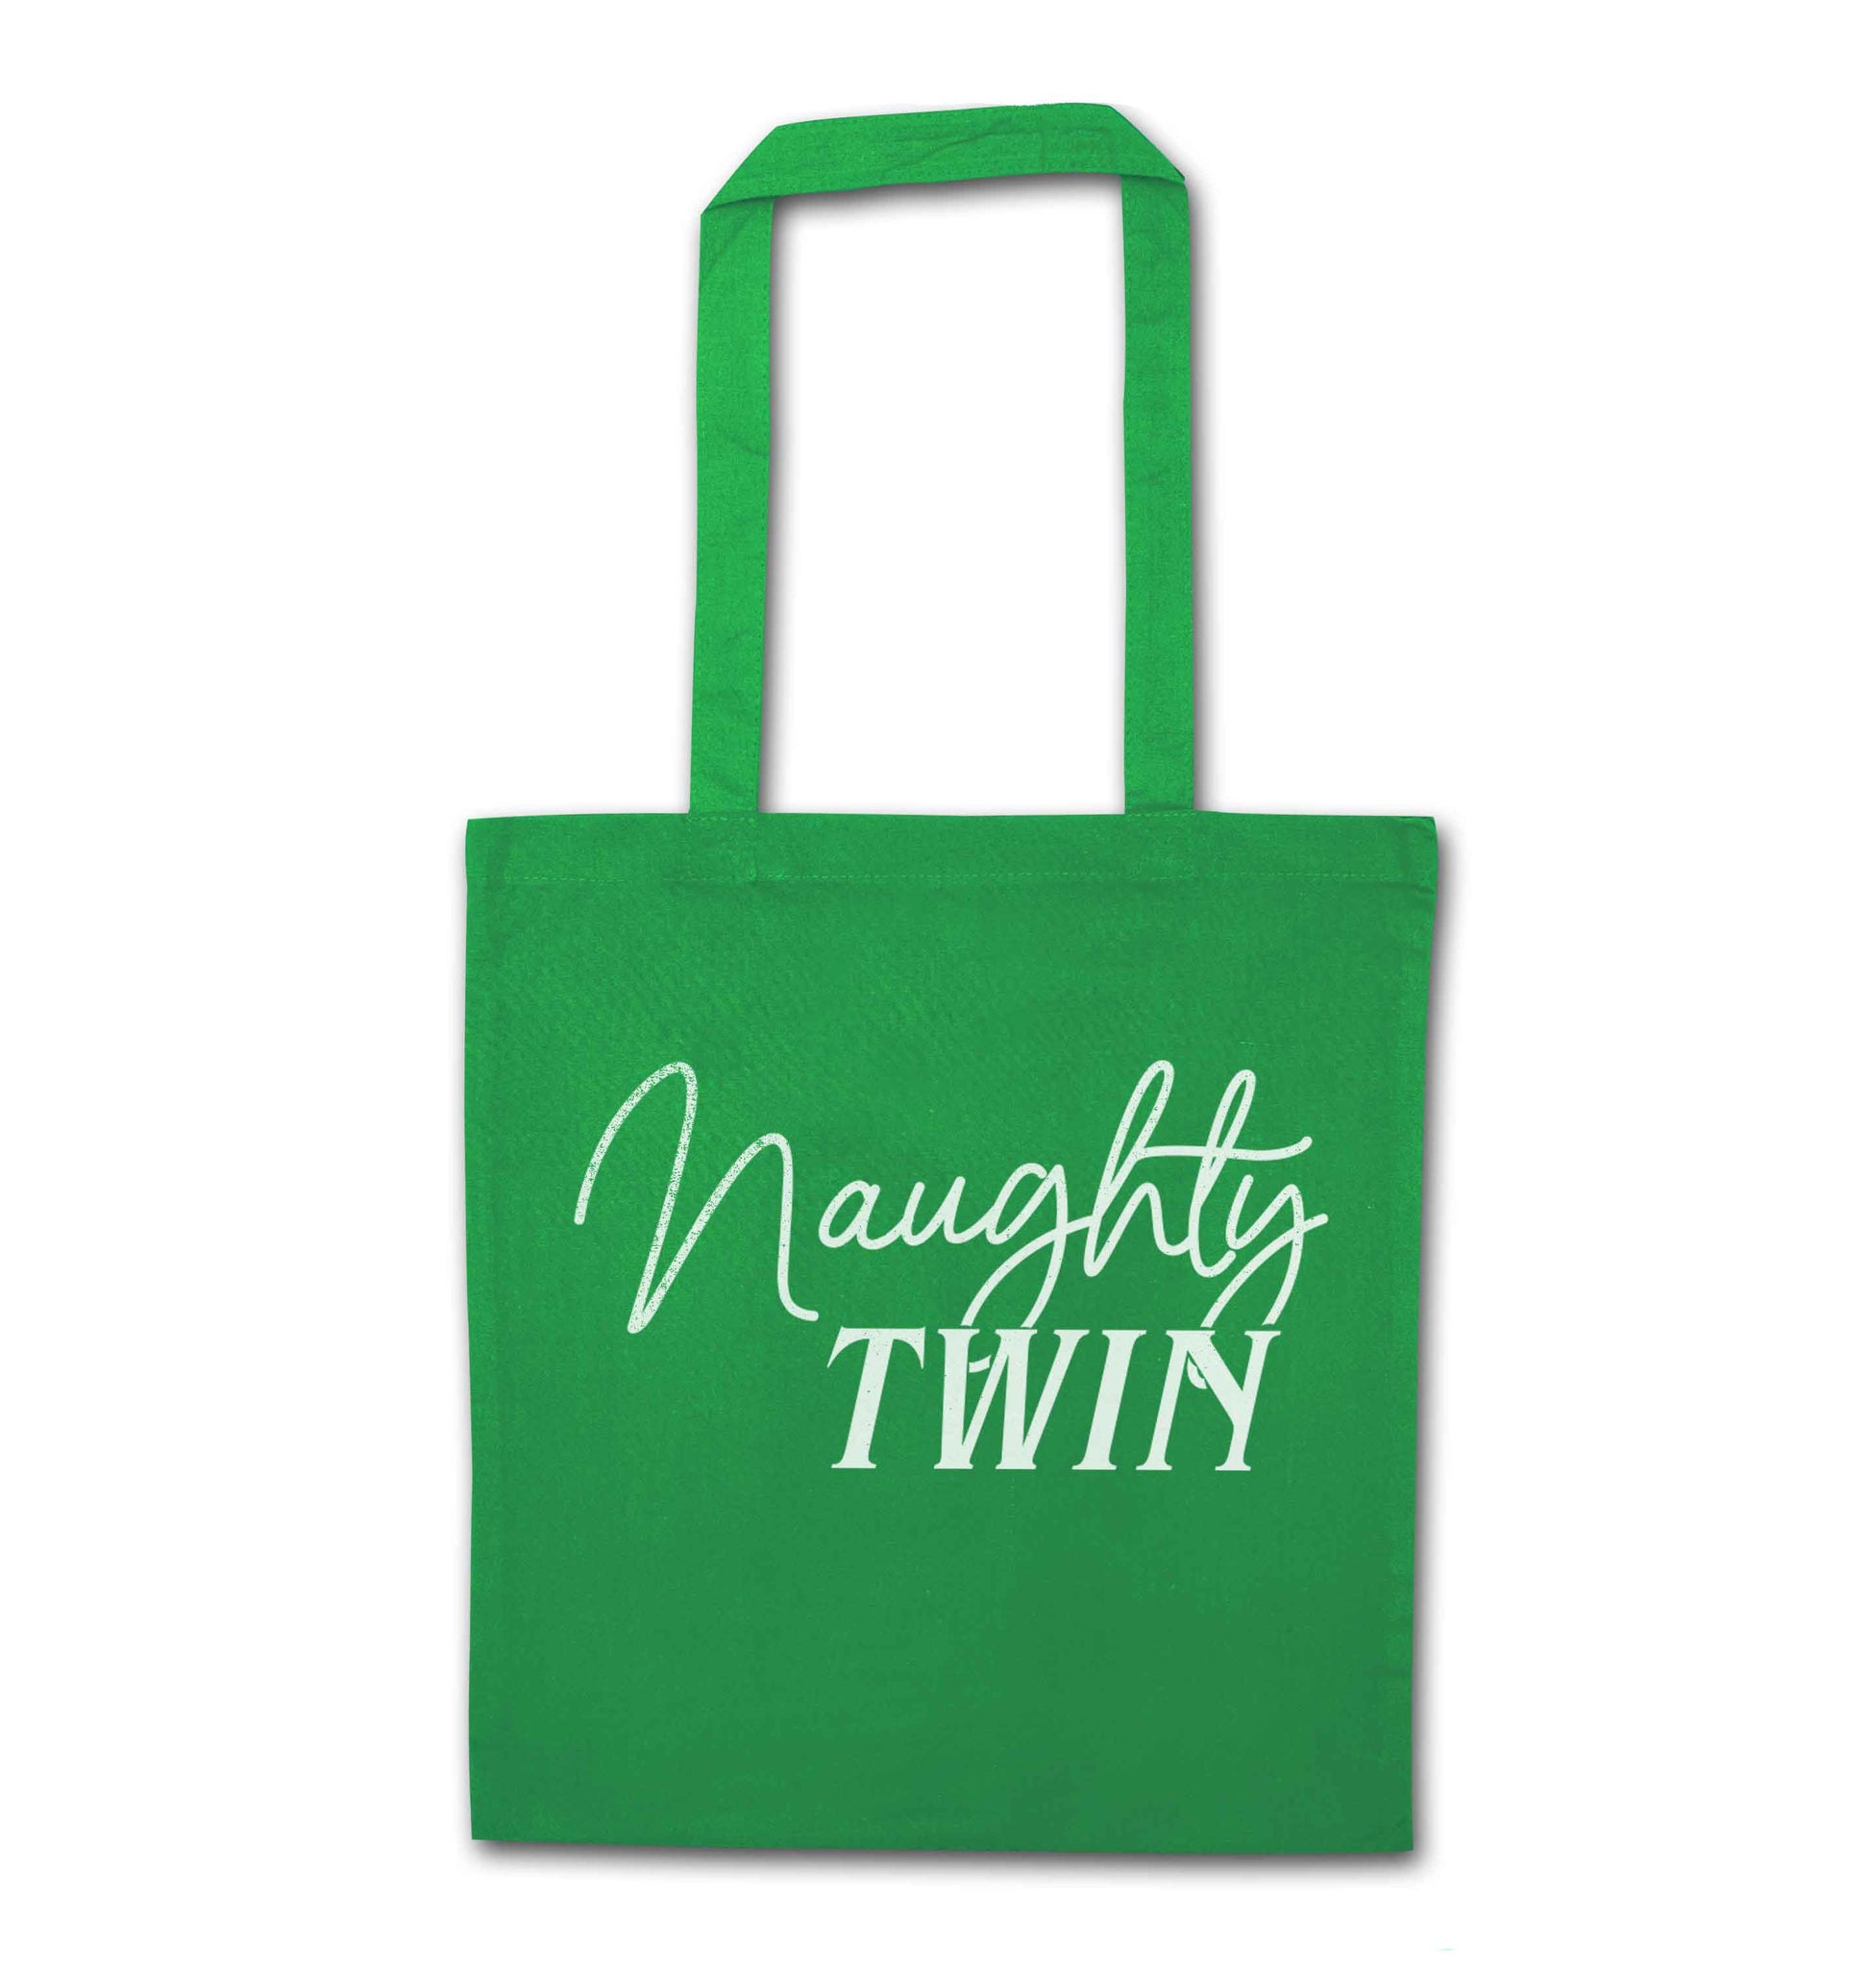 Naughty twin green tote bag